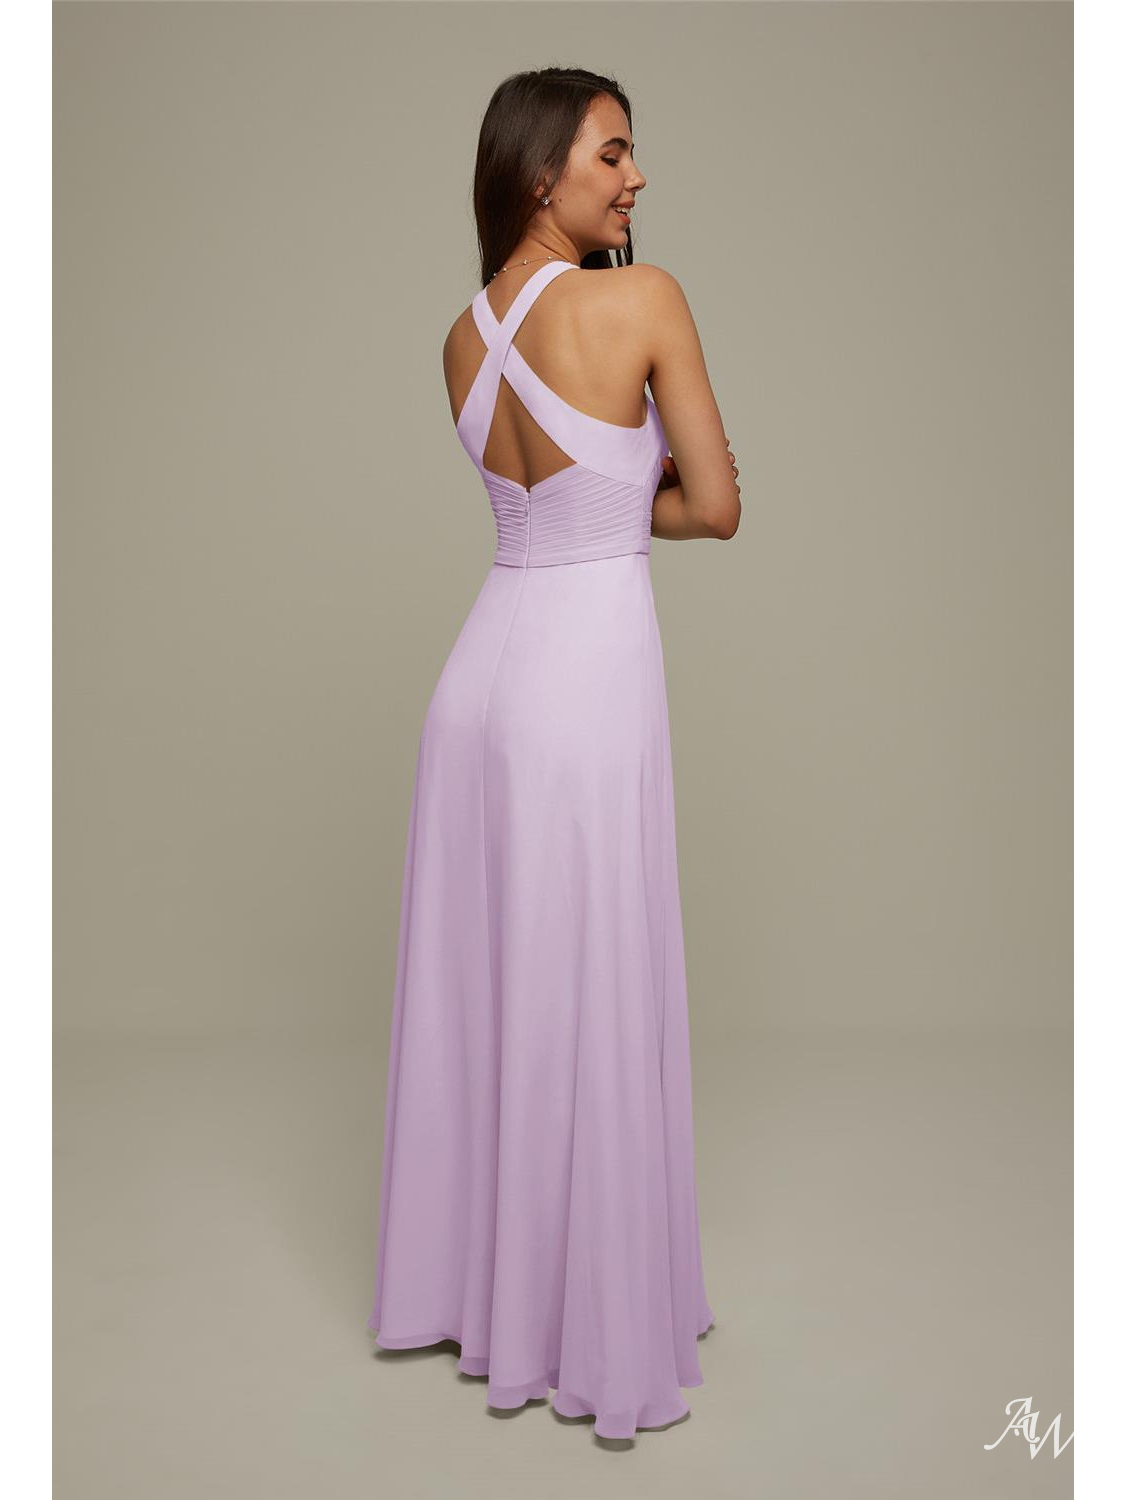 AW Emeline Dress, Lilac Long Bridesmaid Dresses, 99.99 | AW Bridal